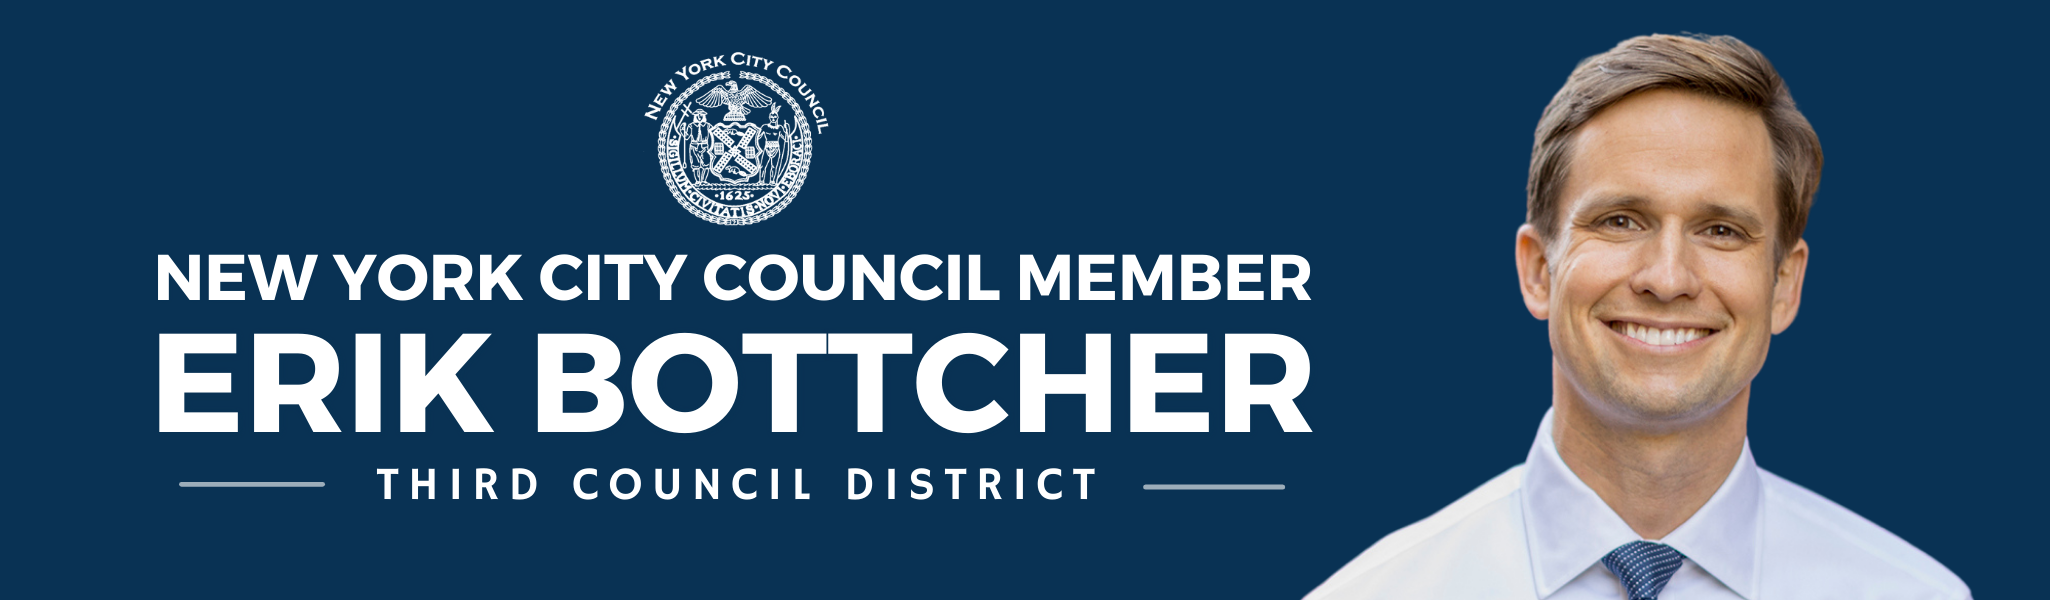 New York City Council Erik Bottcher (3rd District)